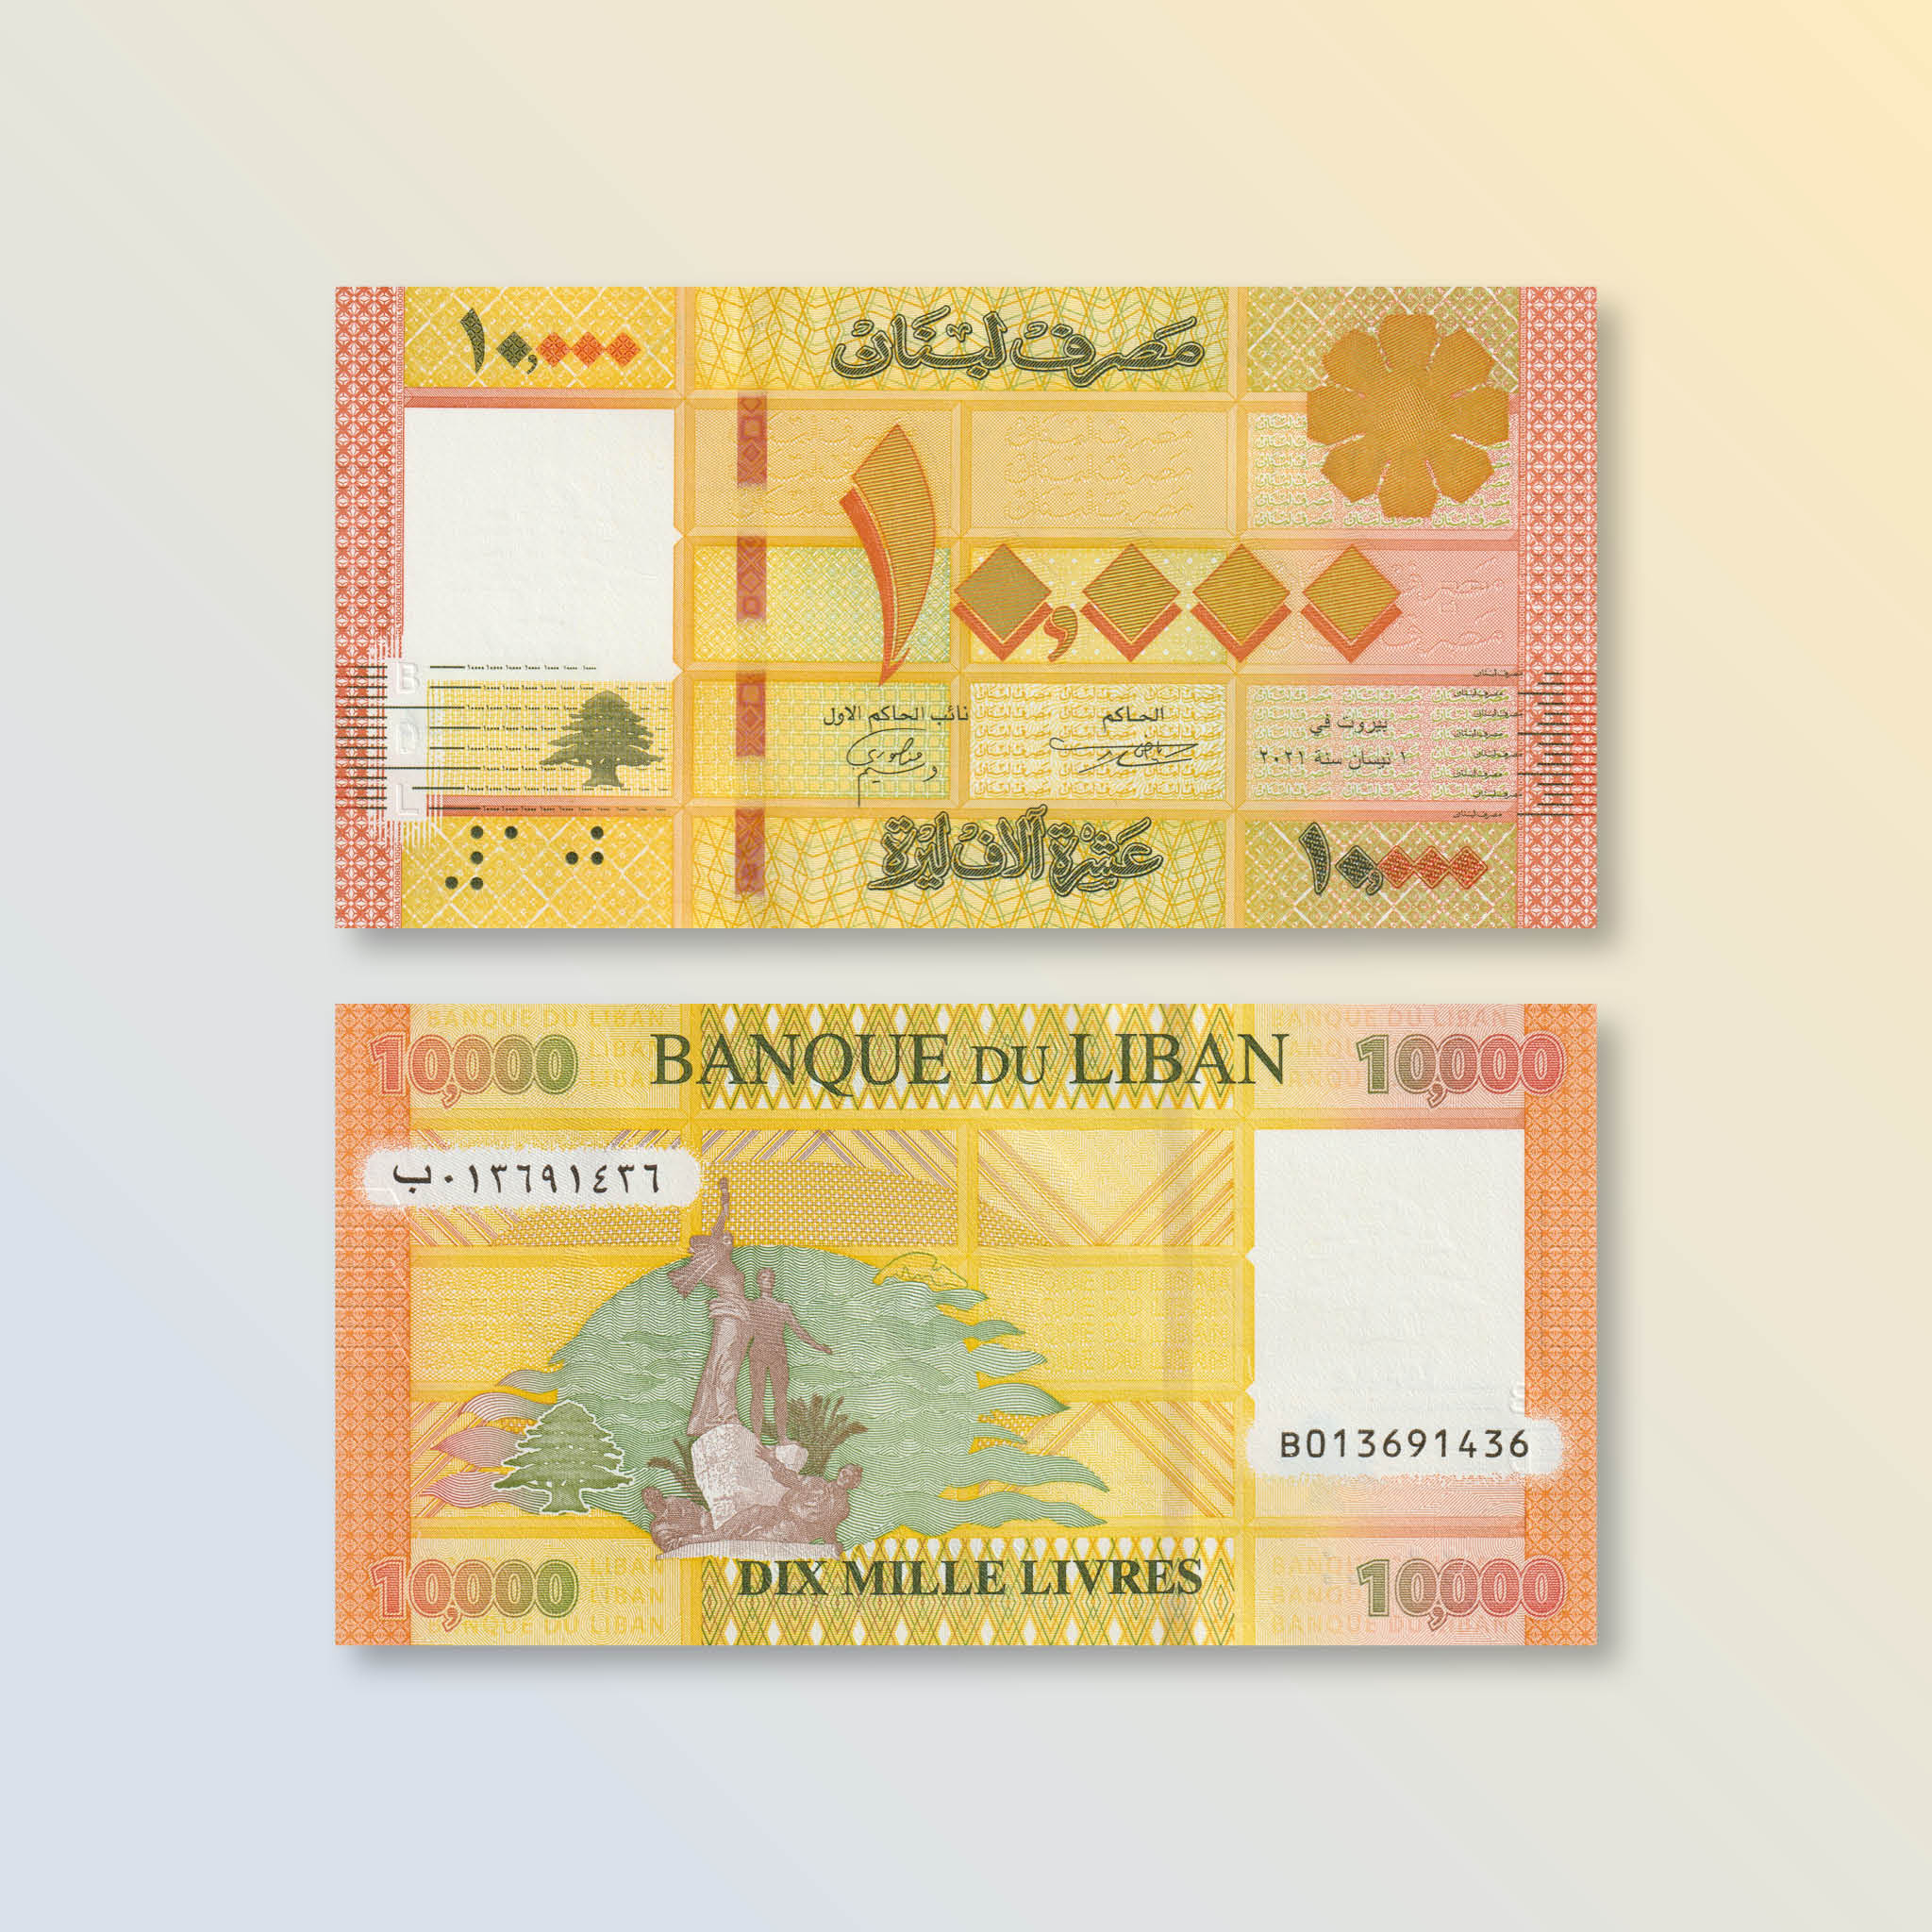 Lebanon 10000 Pounds, 2021, B543a, P92, UNC - Robert's World Money - World Banknotes